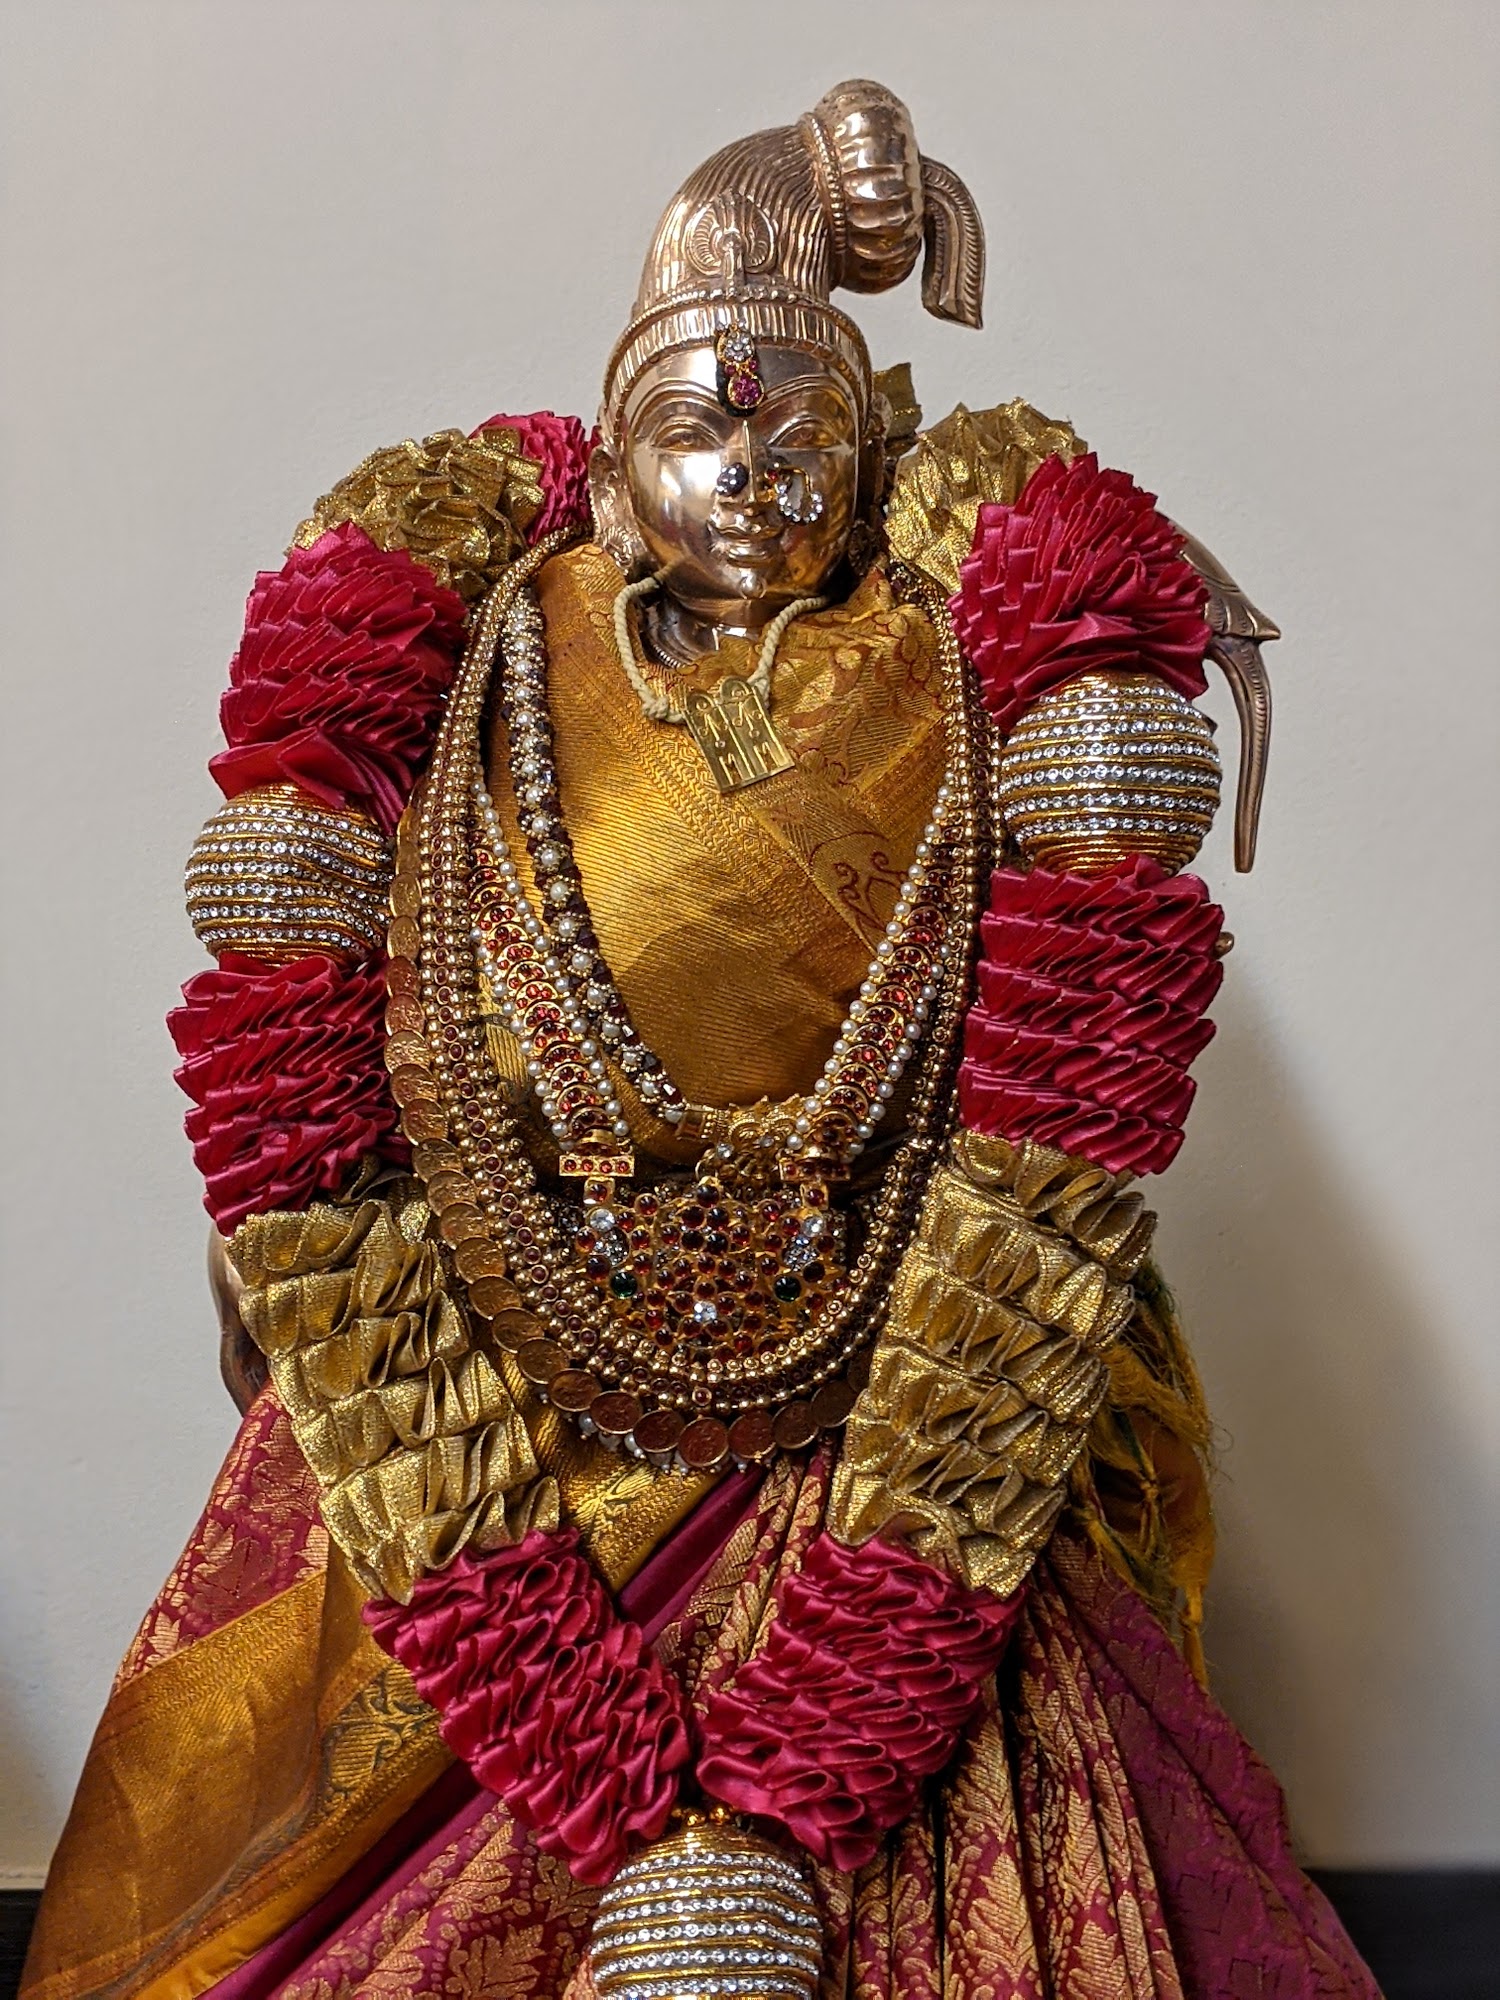 Jaya Hanuman Temple and Cultural Center